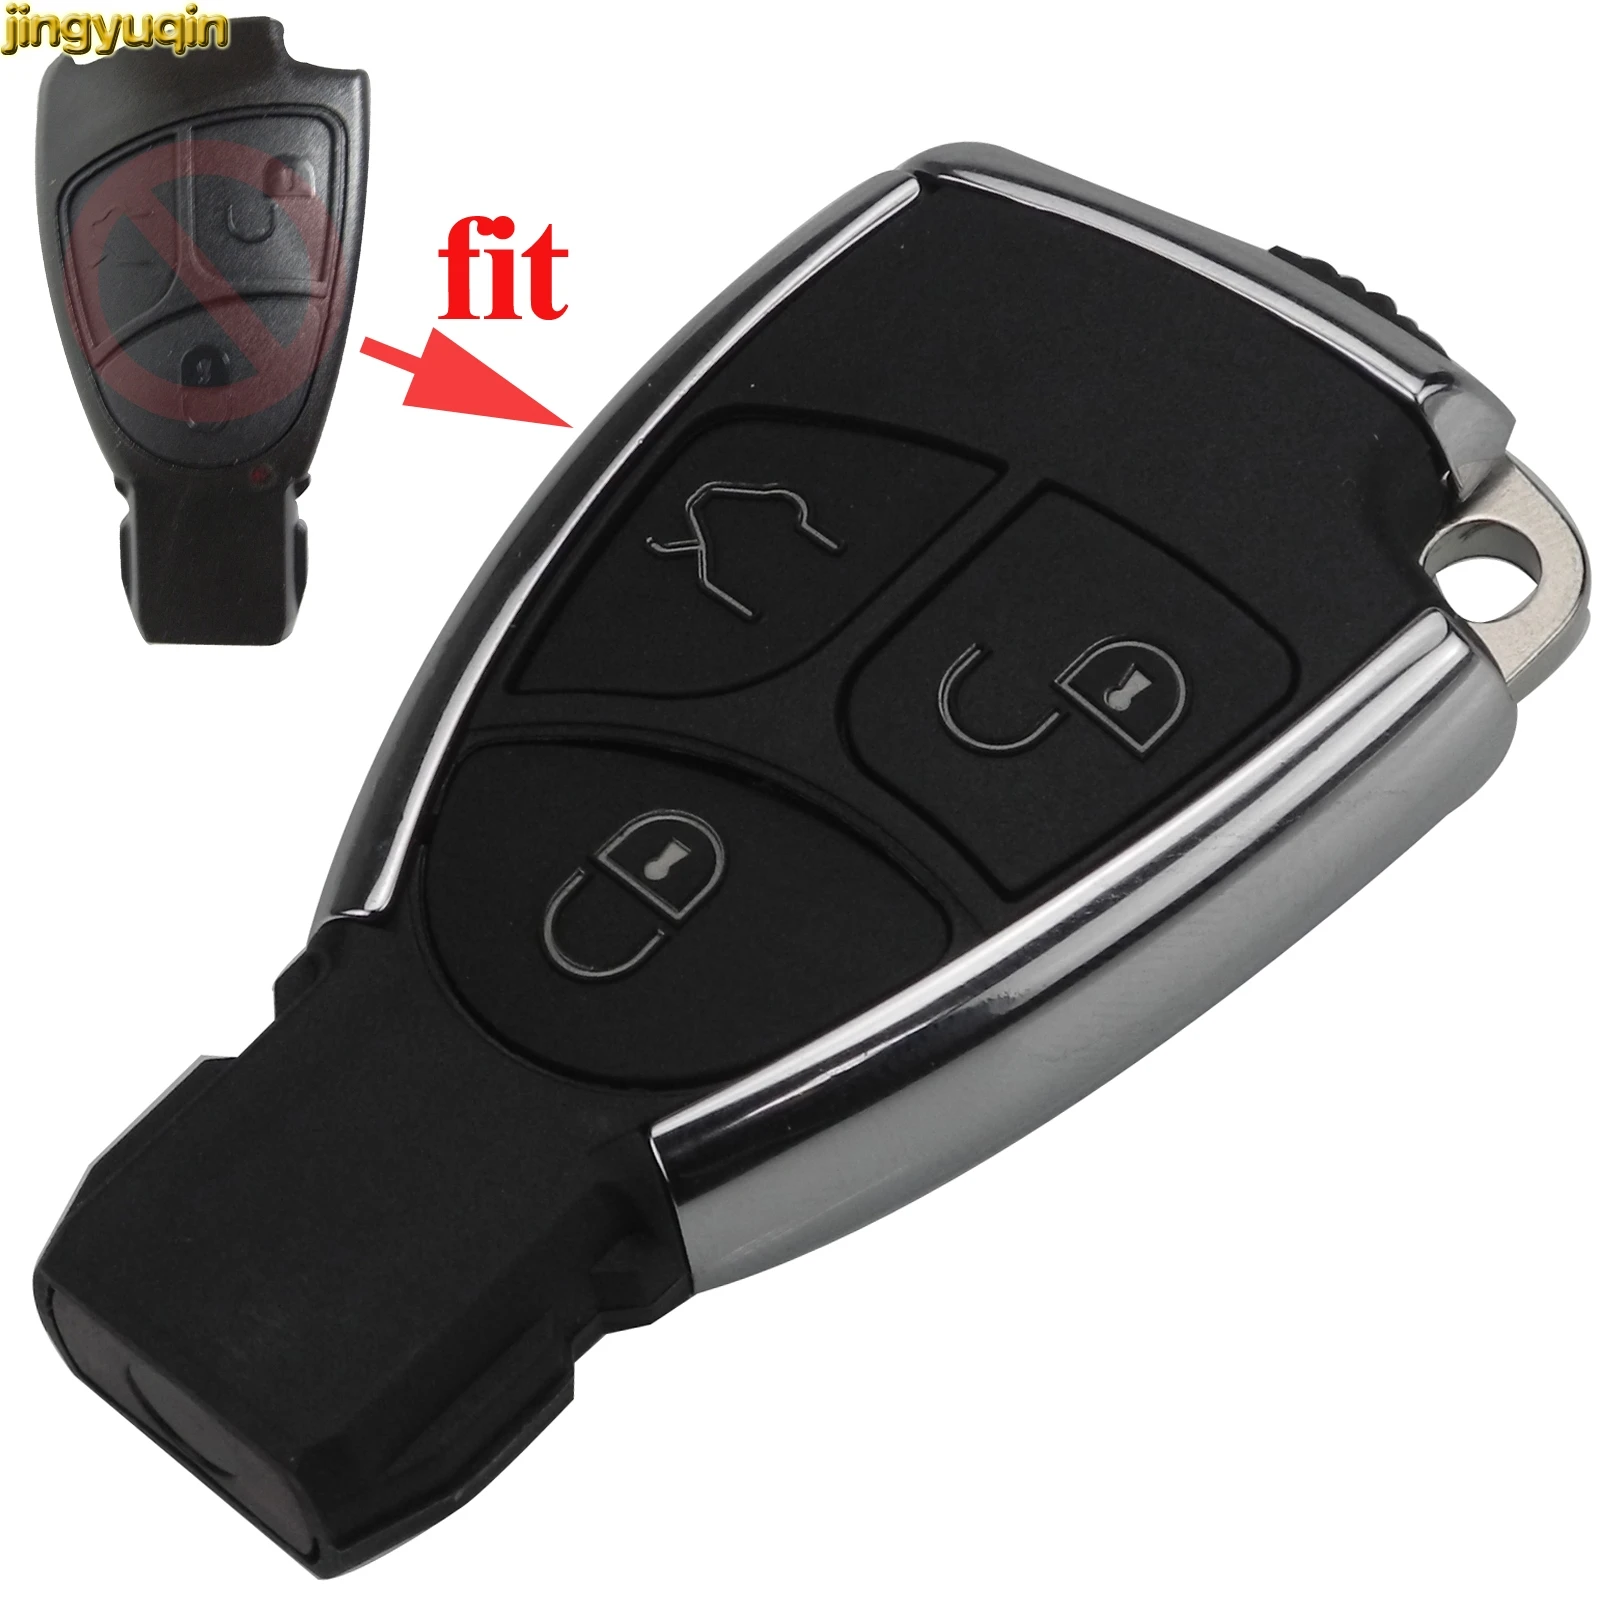 Horande Smart Key Fob Case Fits Mercedes-benz C Cl CLK Cases C E S CLA CLS ML GL GLK CLK SLK Class Remote Control Key Cover Shell No Chip